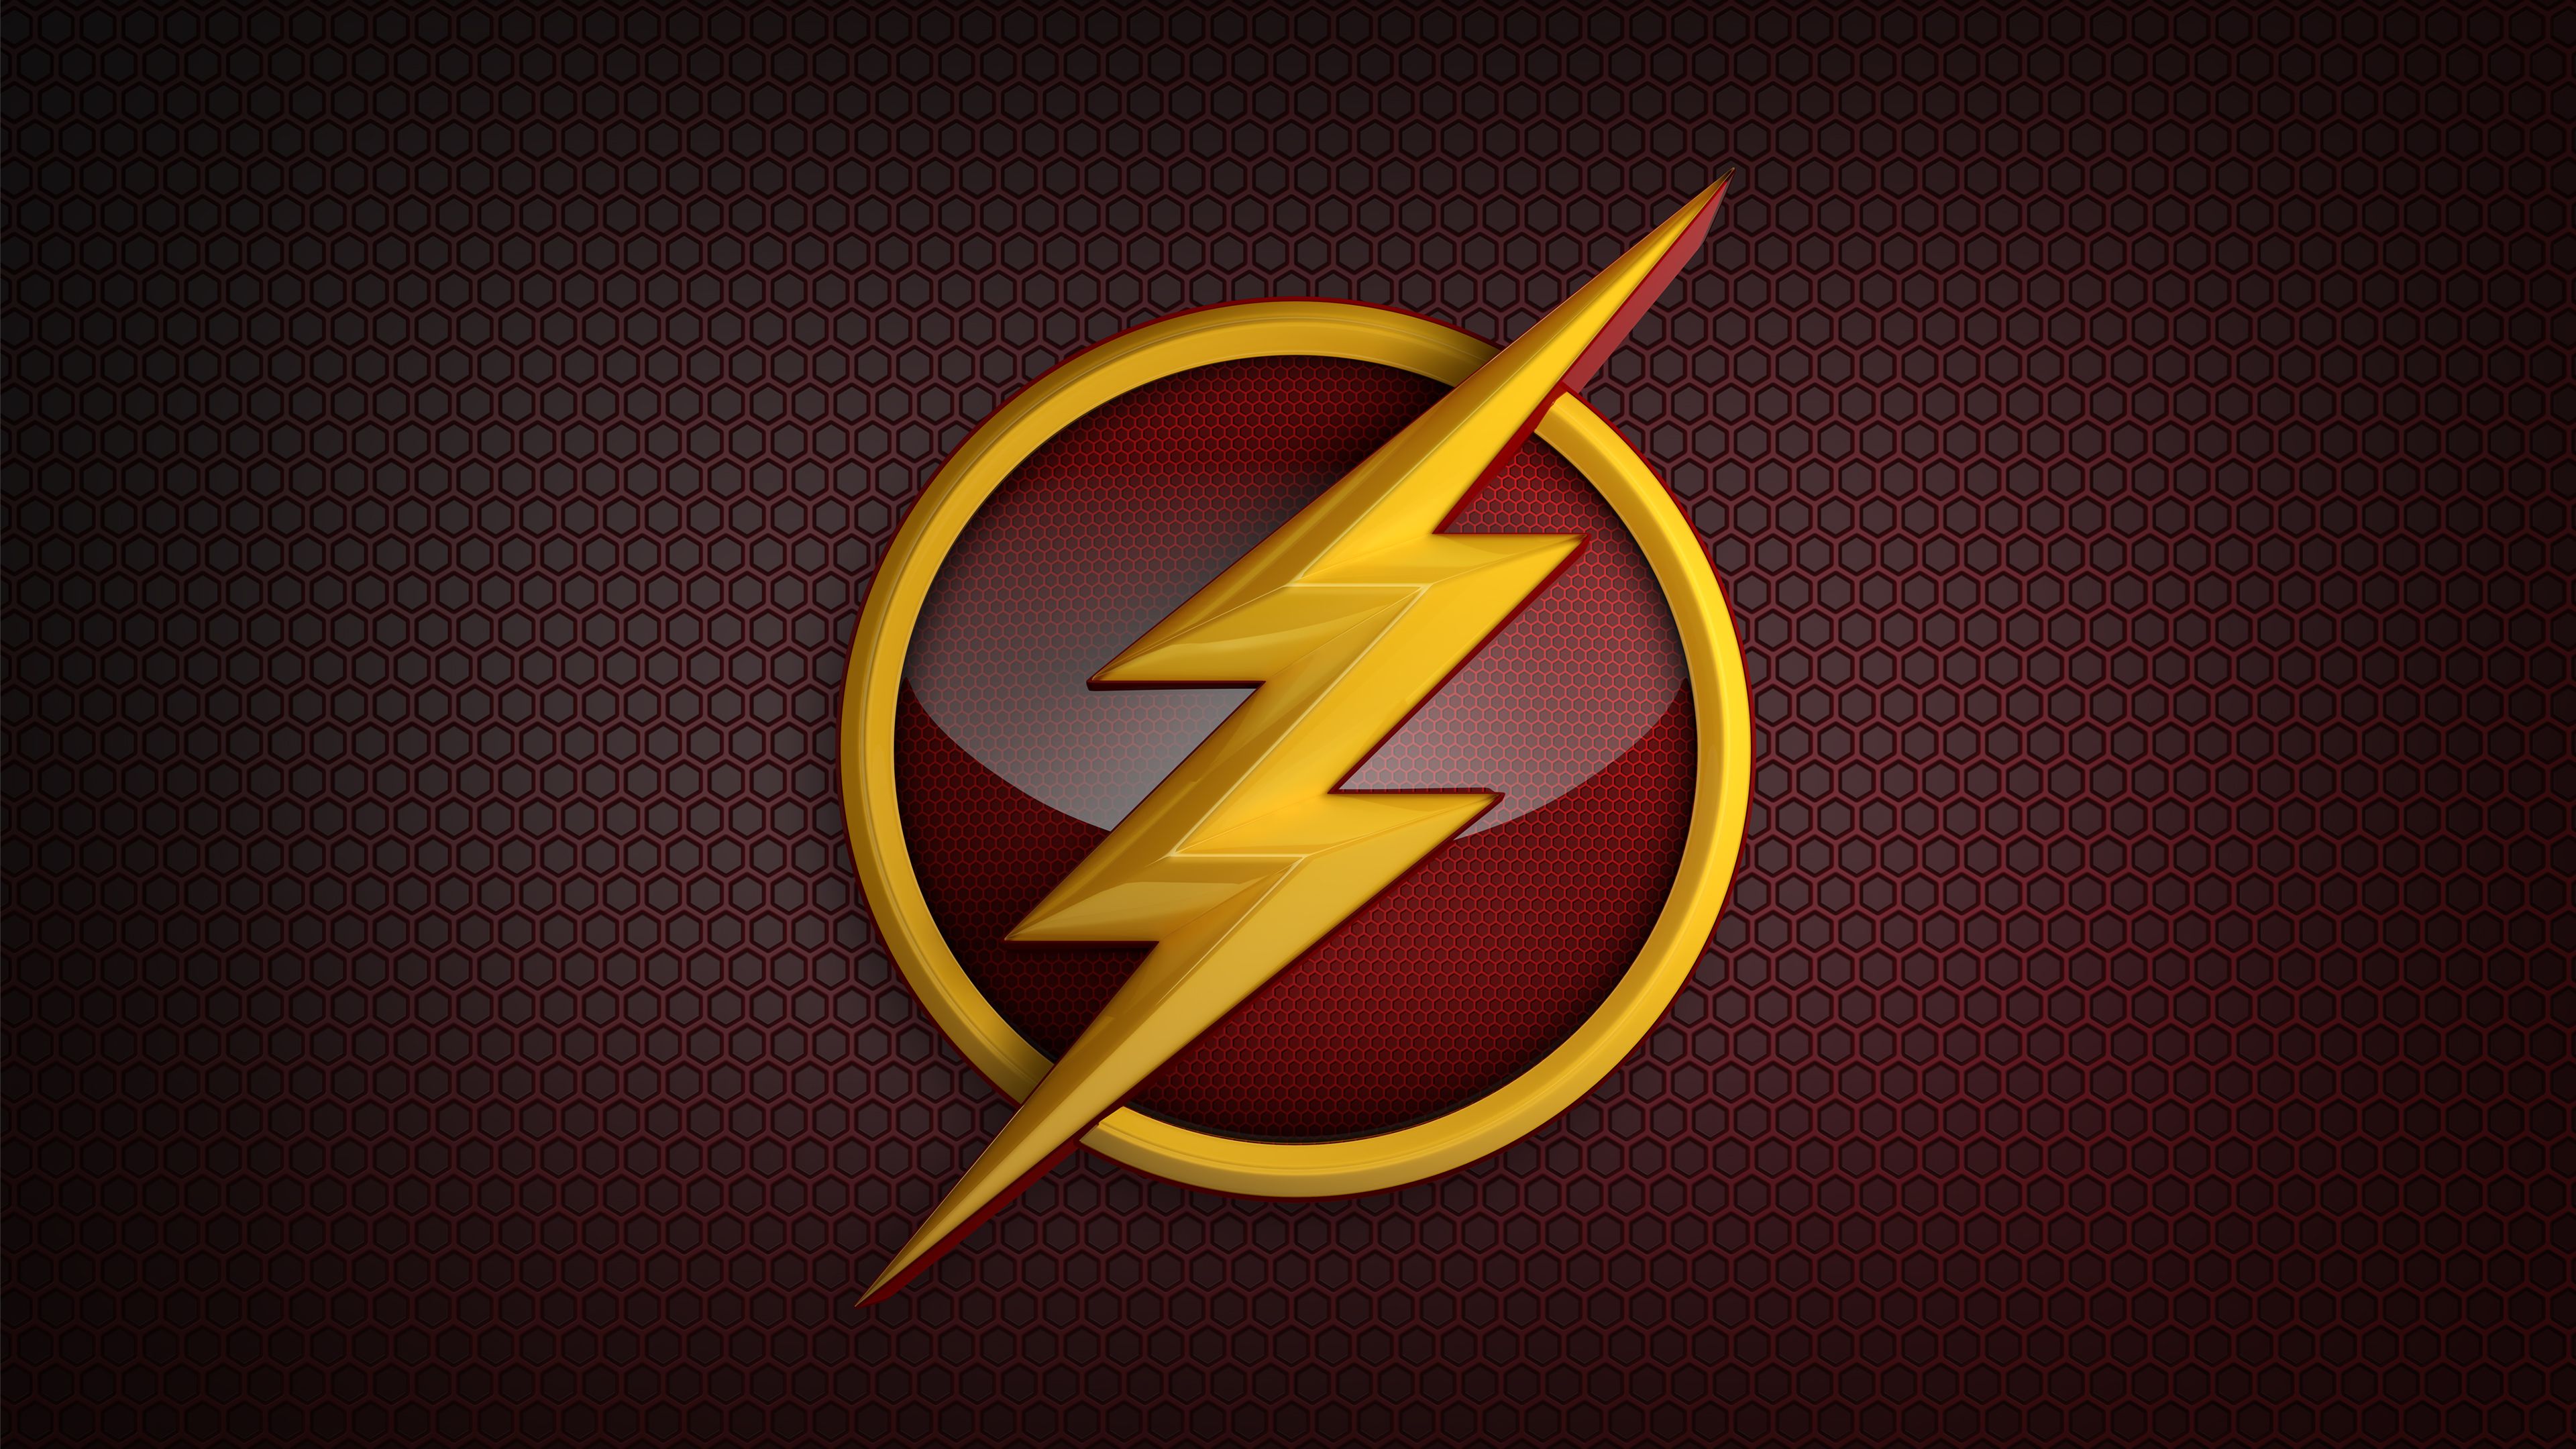 The Flash Lightning Bolt 4K